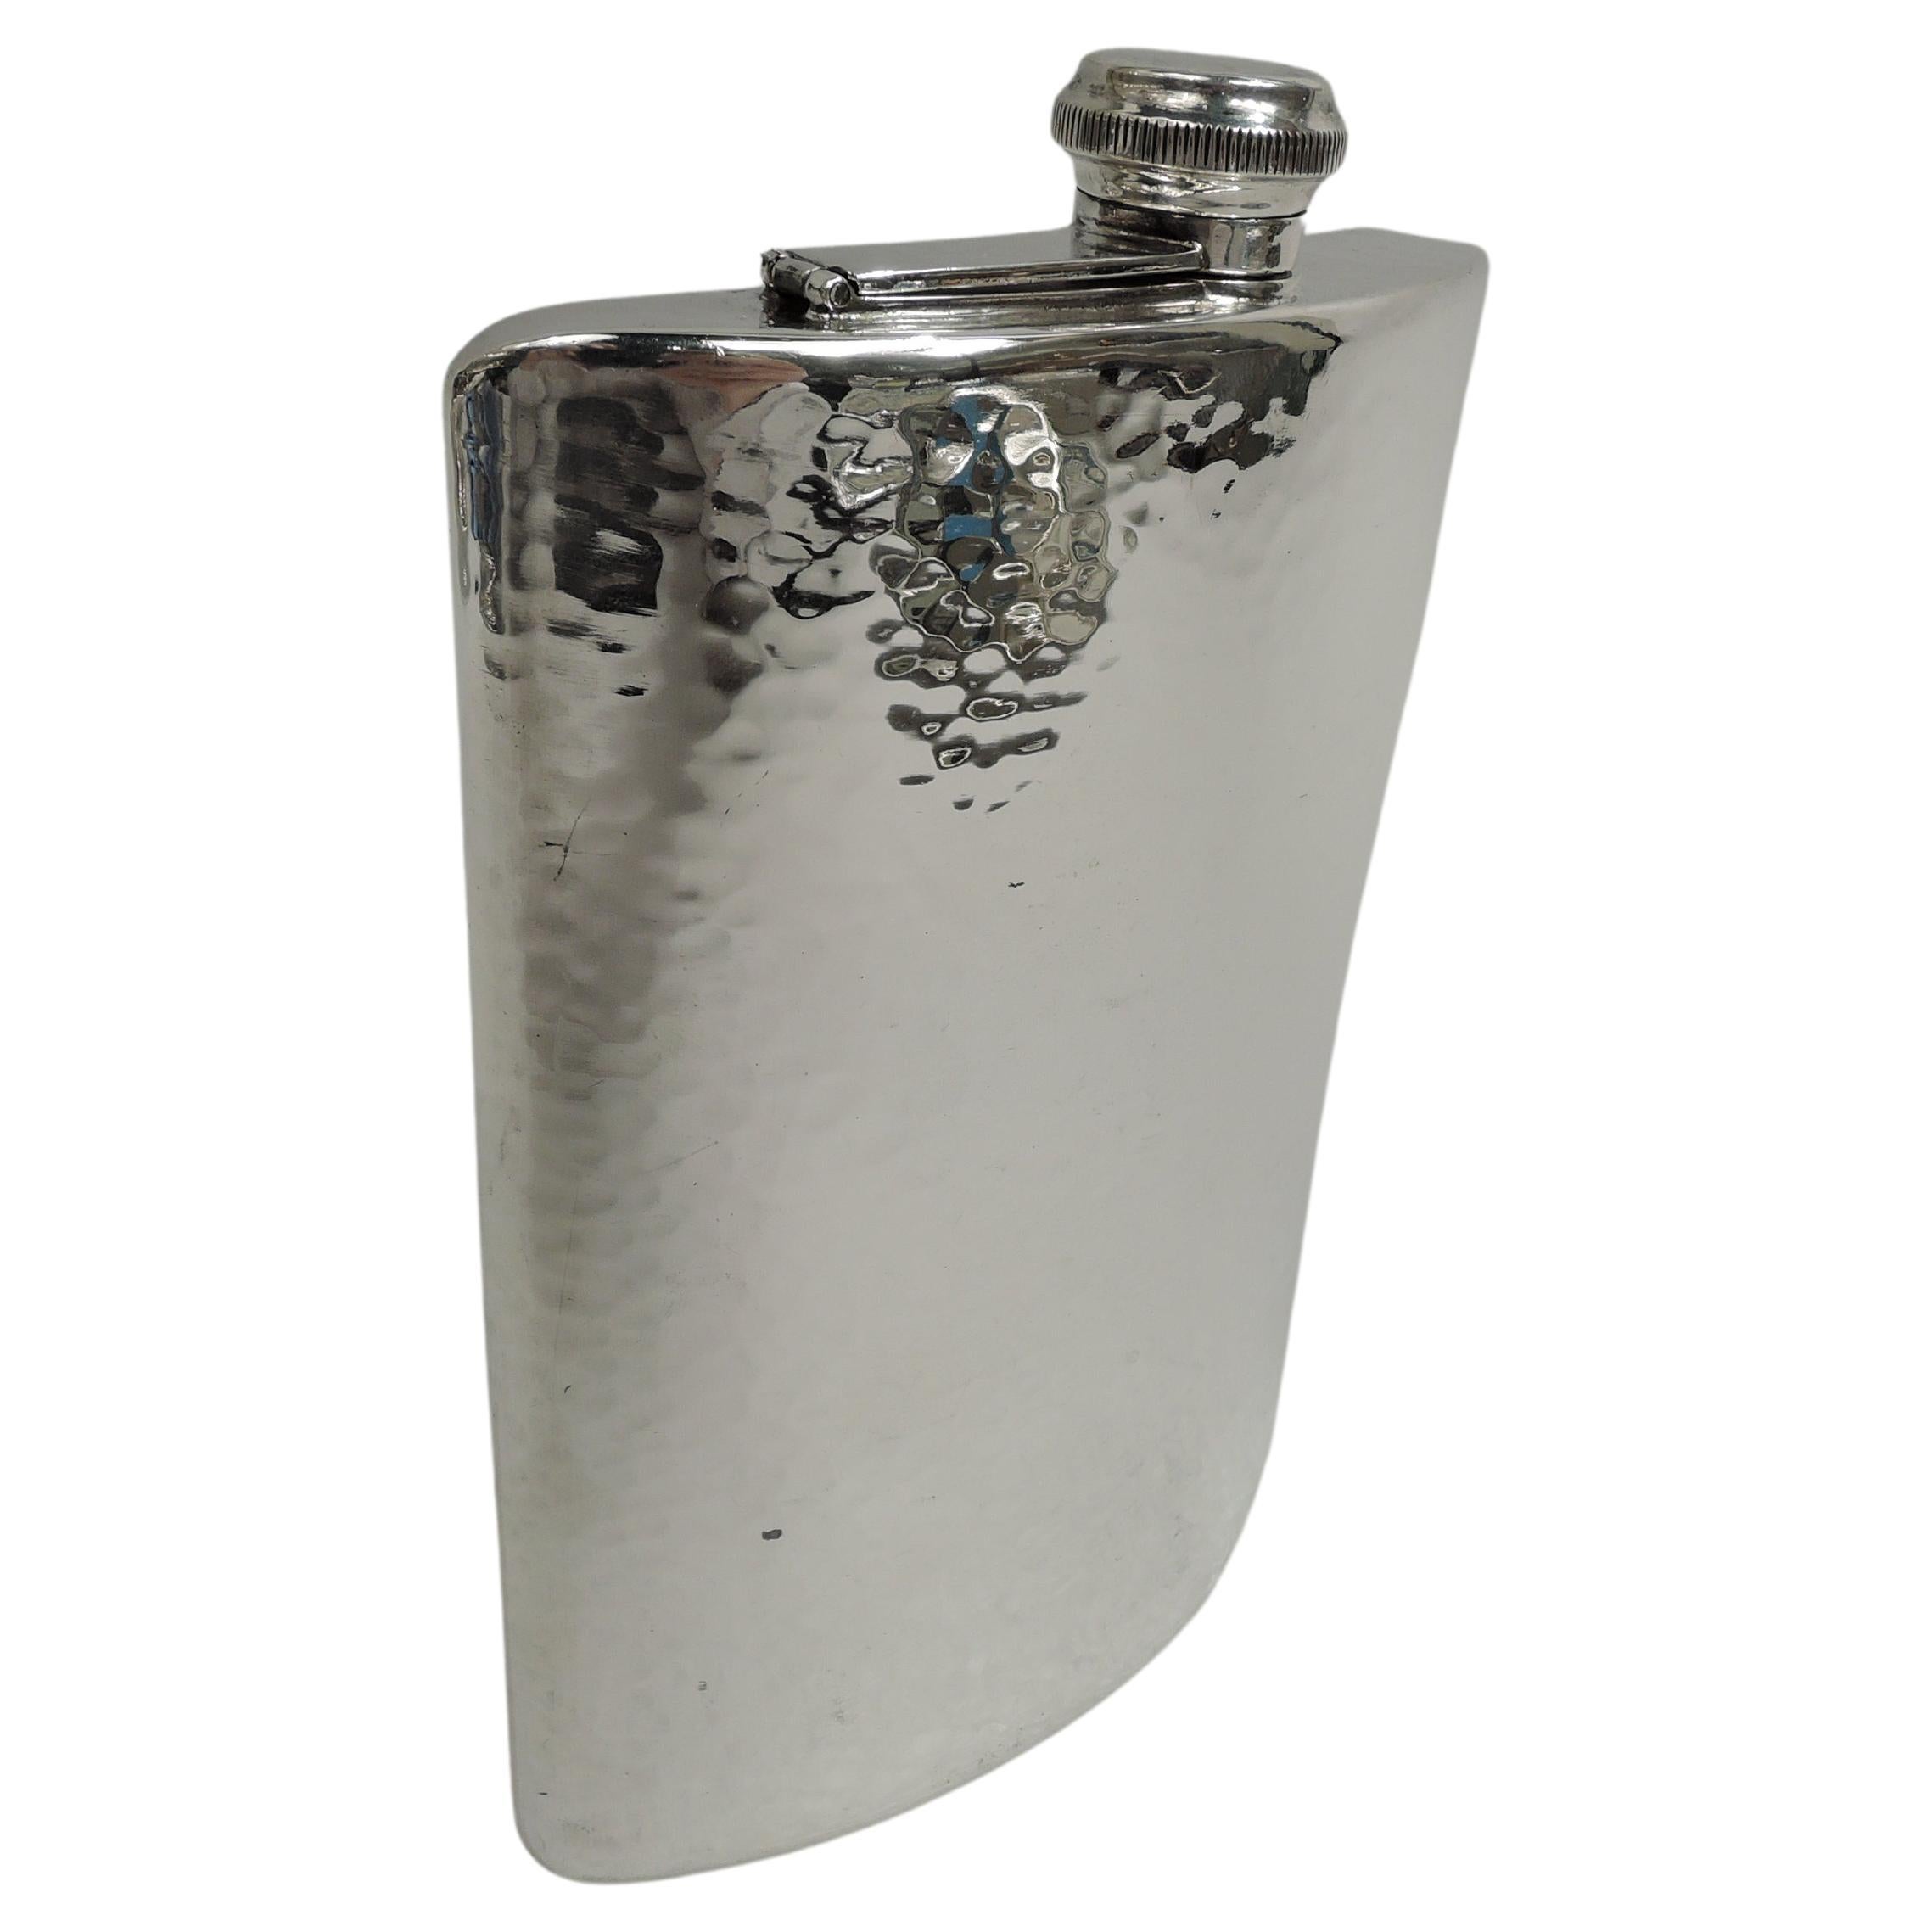 Chicago Craftsman Hand-Hammered Sterling Silver Flask by Lebolt